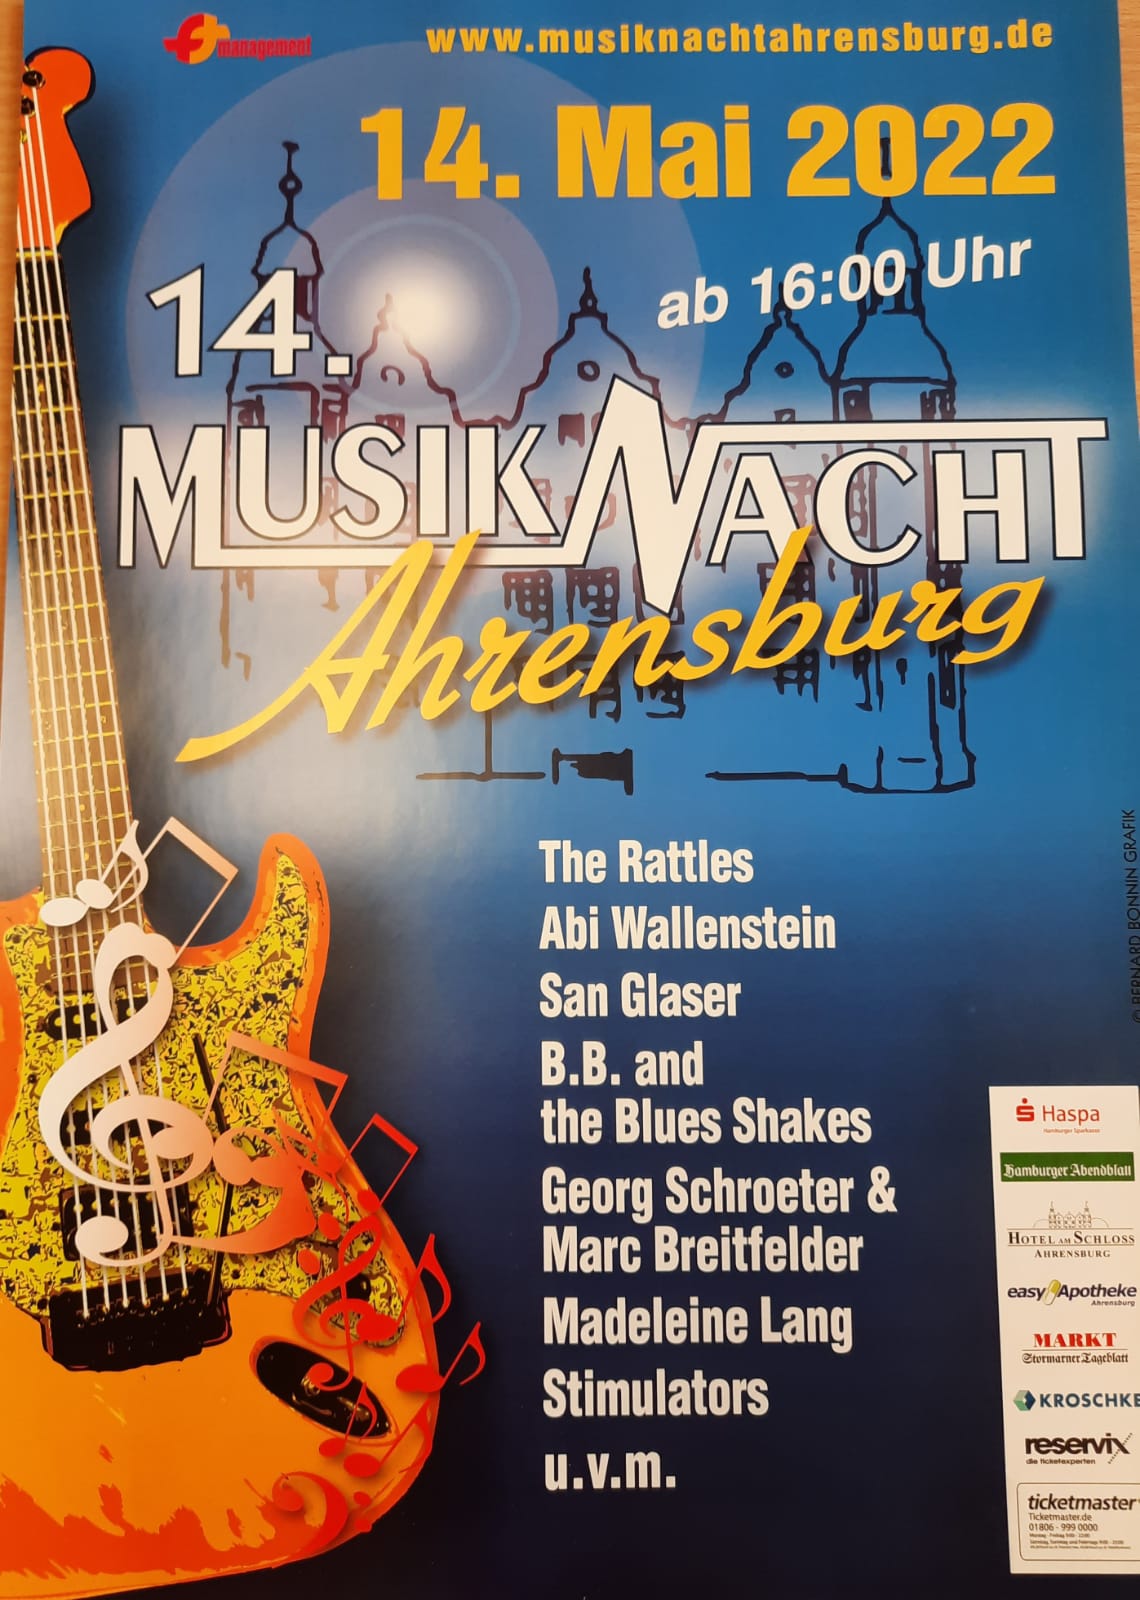 (c) Musiknacht-ahrensburg.de